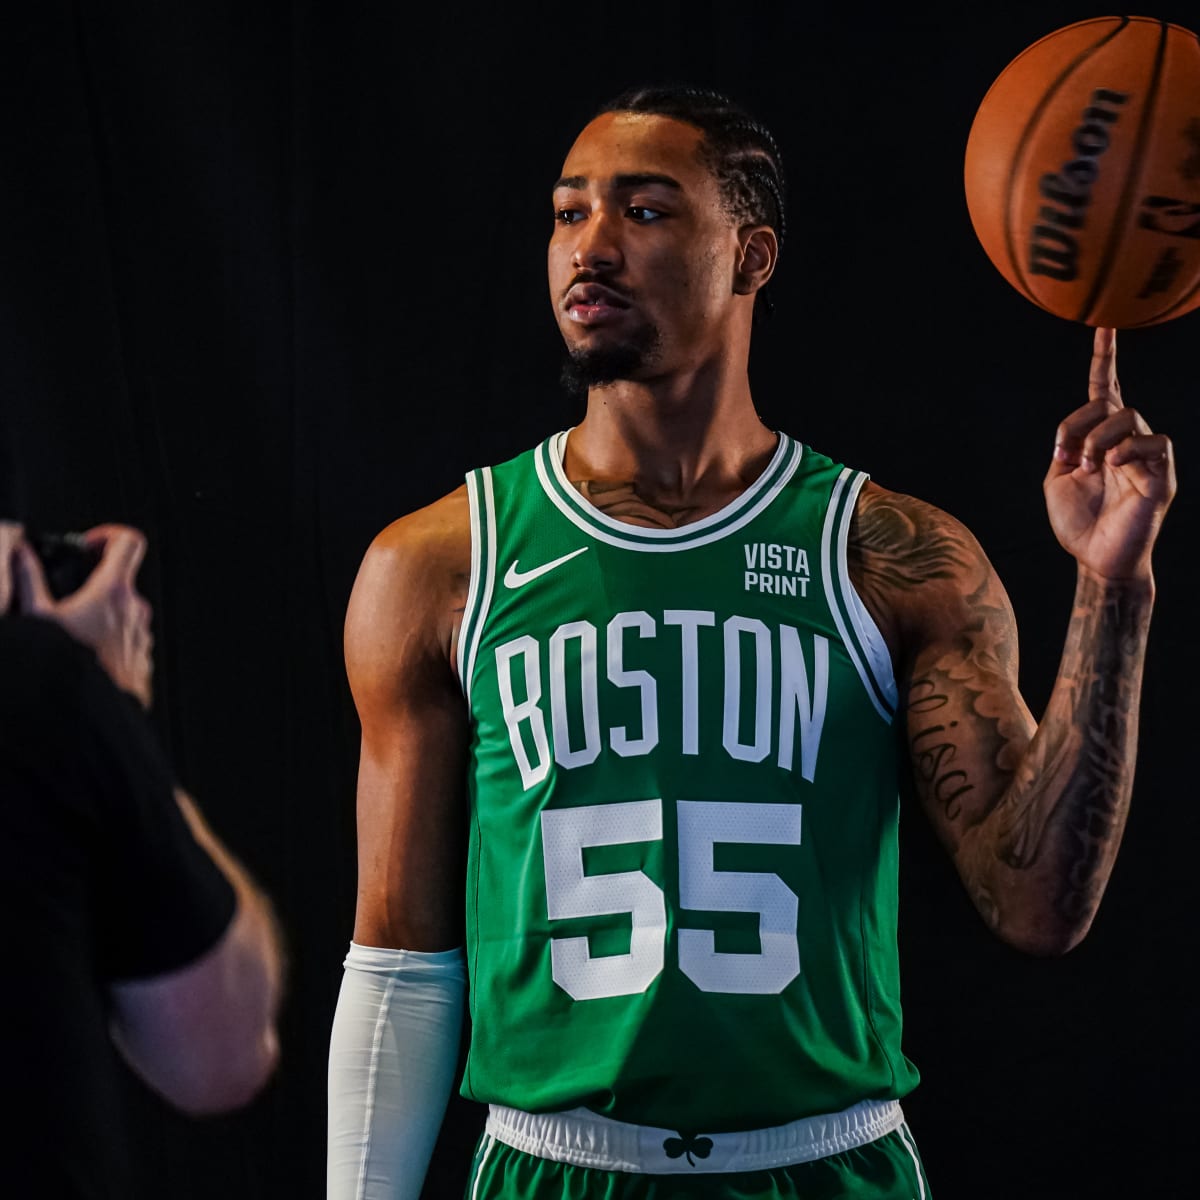 Boston Celtics 24 on jersey, explained